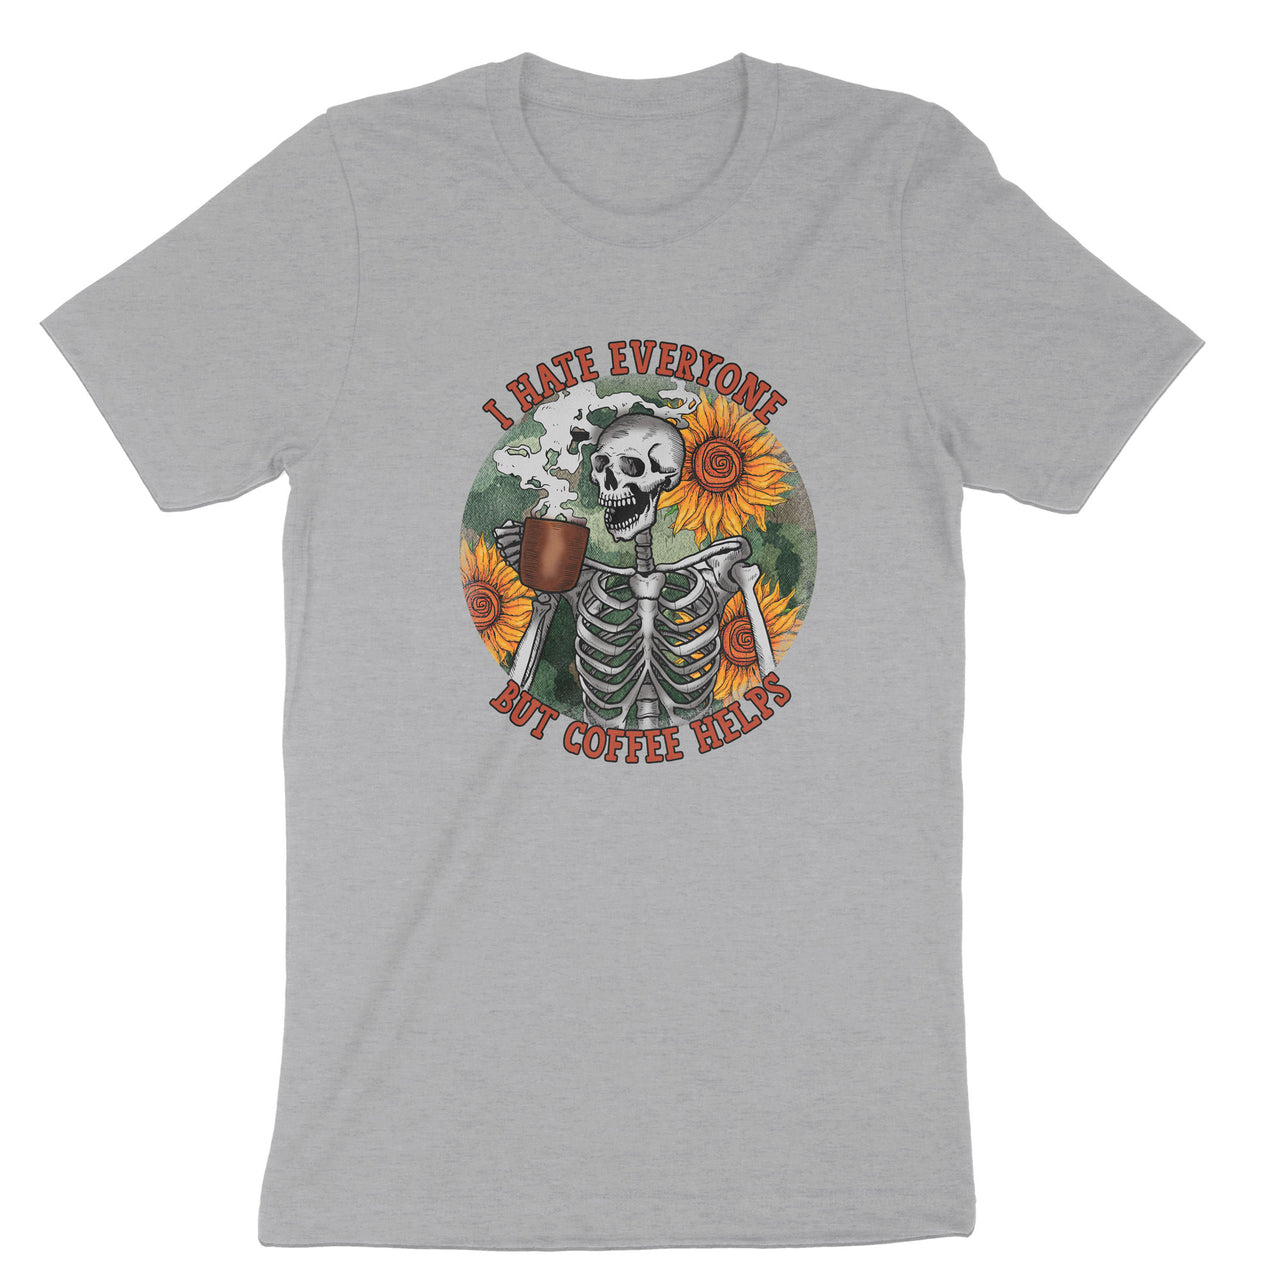 Skull Coffee T-Shirt, I Hate Everyone but Coffee Helps Tee Shirt